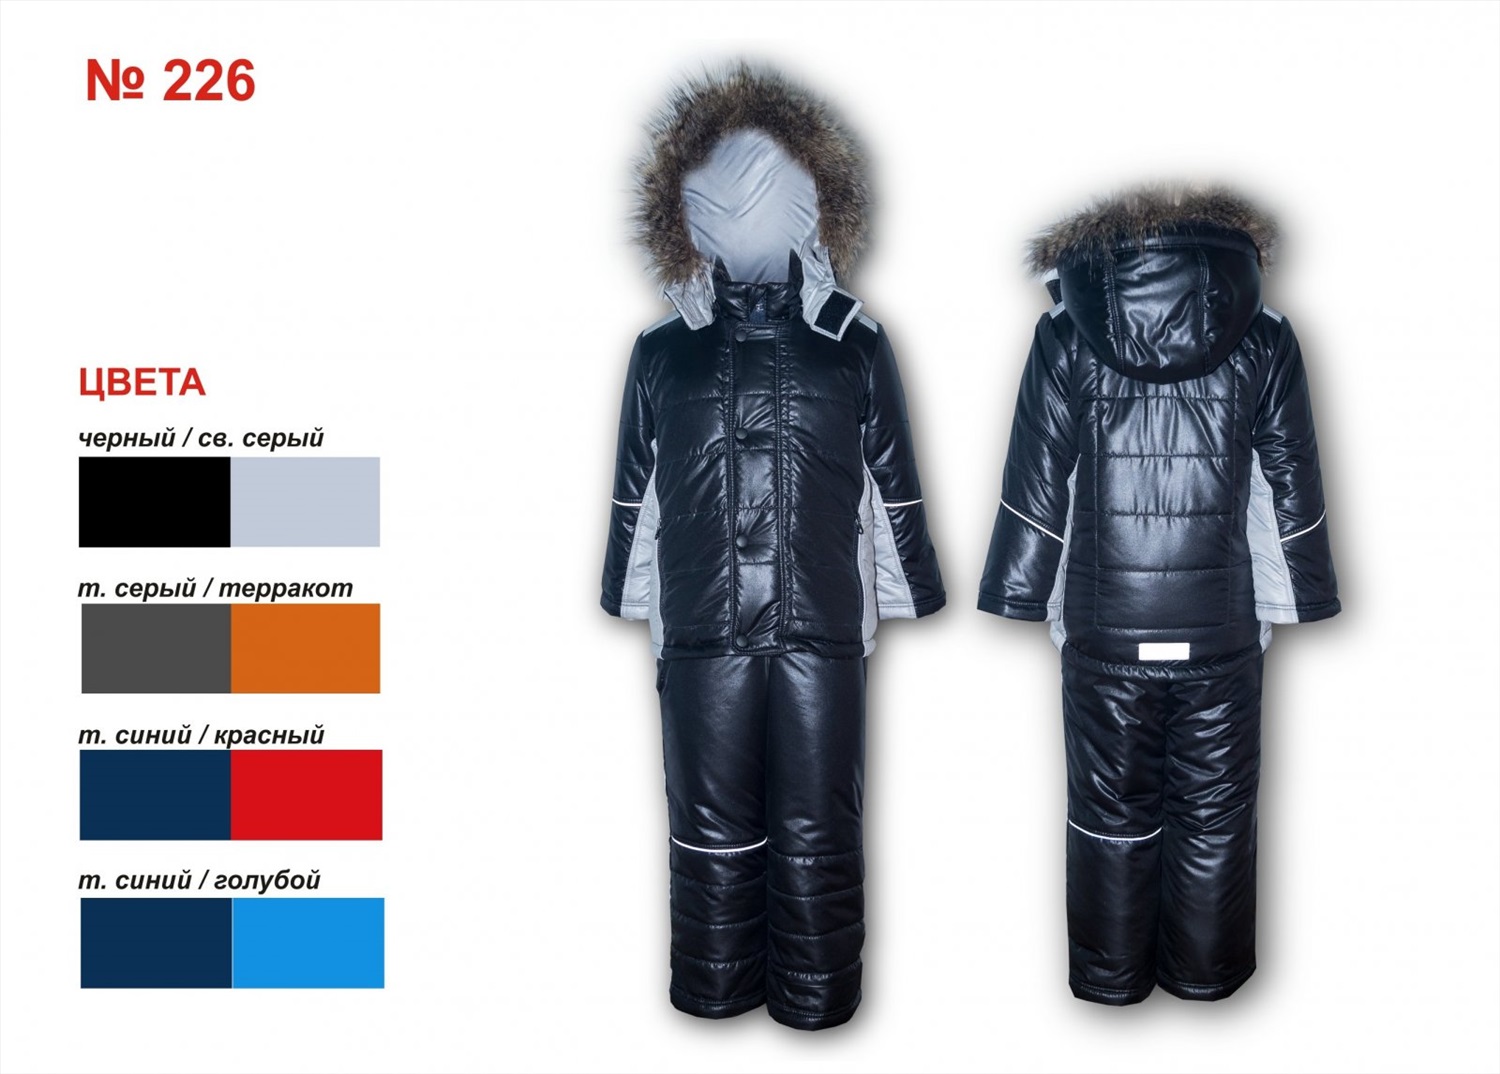 Куртка и полукомбинезон Genesis. Какой утеплитель у куртки на - 10. Гулливер зима мальчика куртка и штаны. Black Wolf куртка для мальчика.